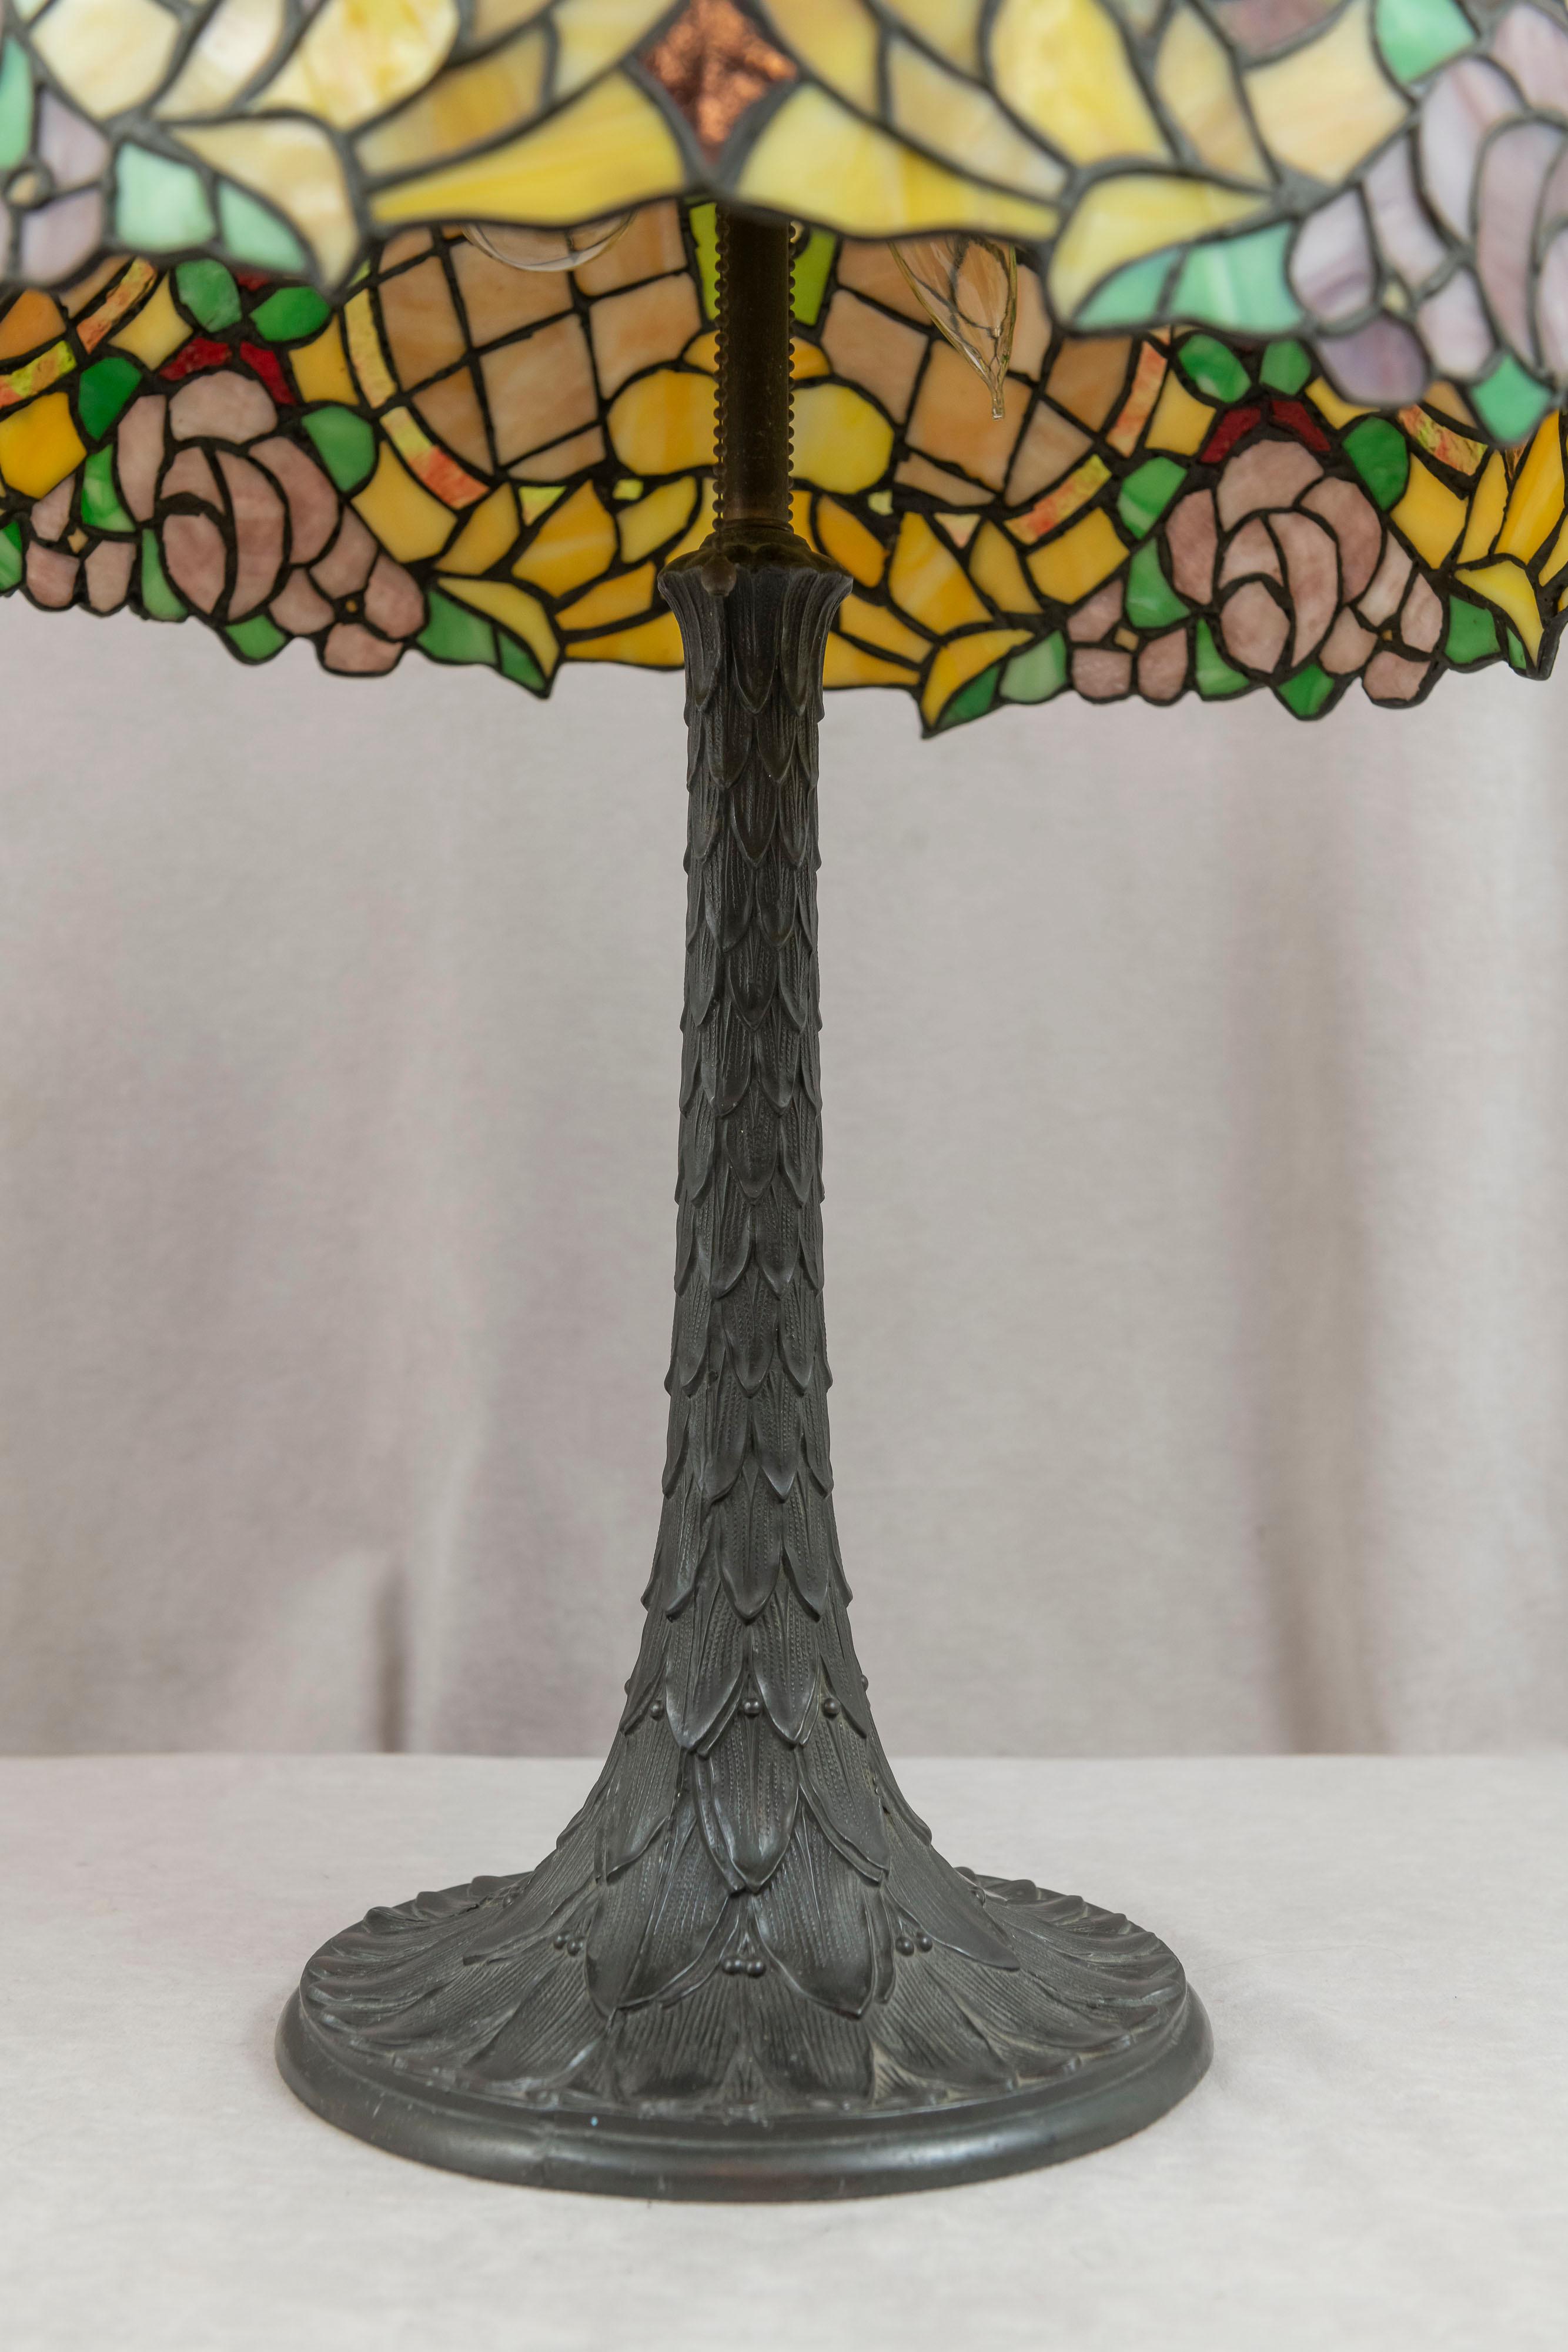 Antique Art Nouveau Leaded Glass Table Lamp by Chicago Mosaic, ca. 1910 For Sale 1